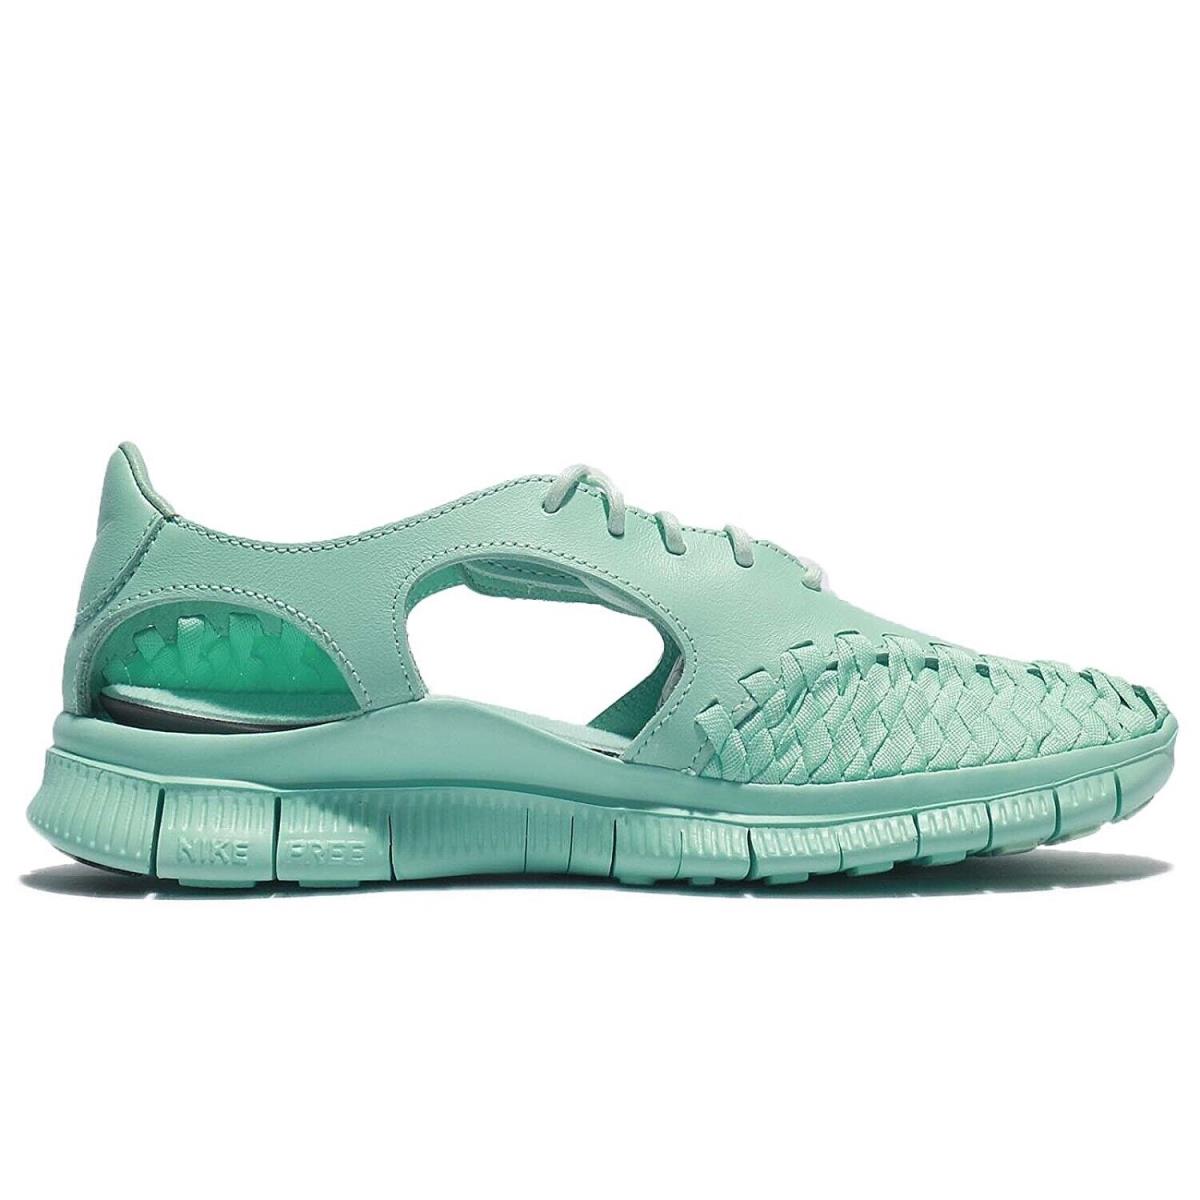 Nike Free Inneva Size 7.5 Women`s Casual Shoes 813069 330 - ARTISAN TEAL